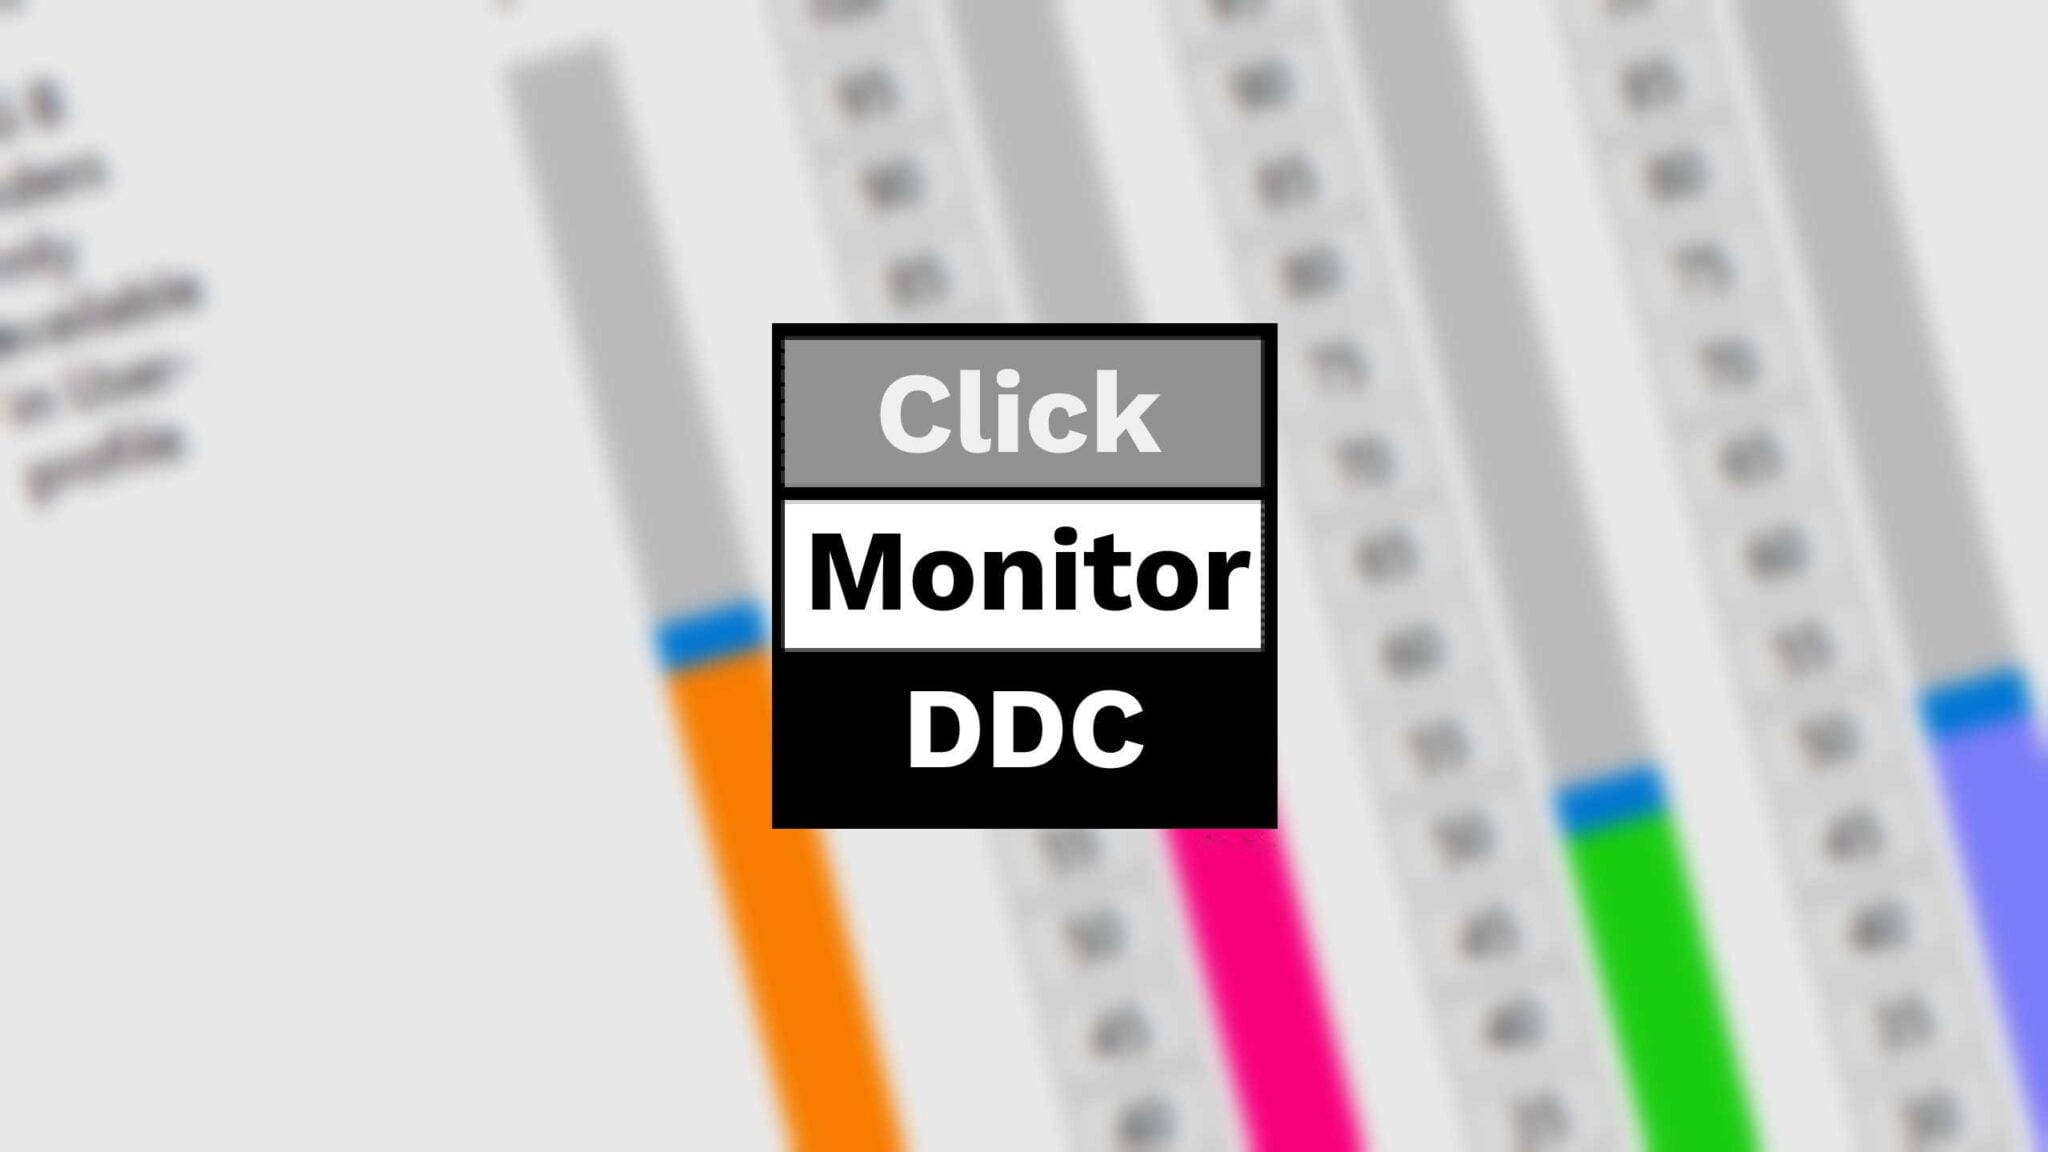 ClickMonitorDDC - change monitor brightness and colors